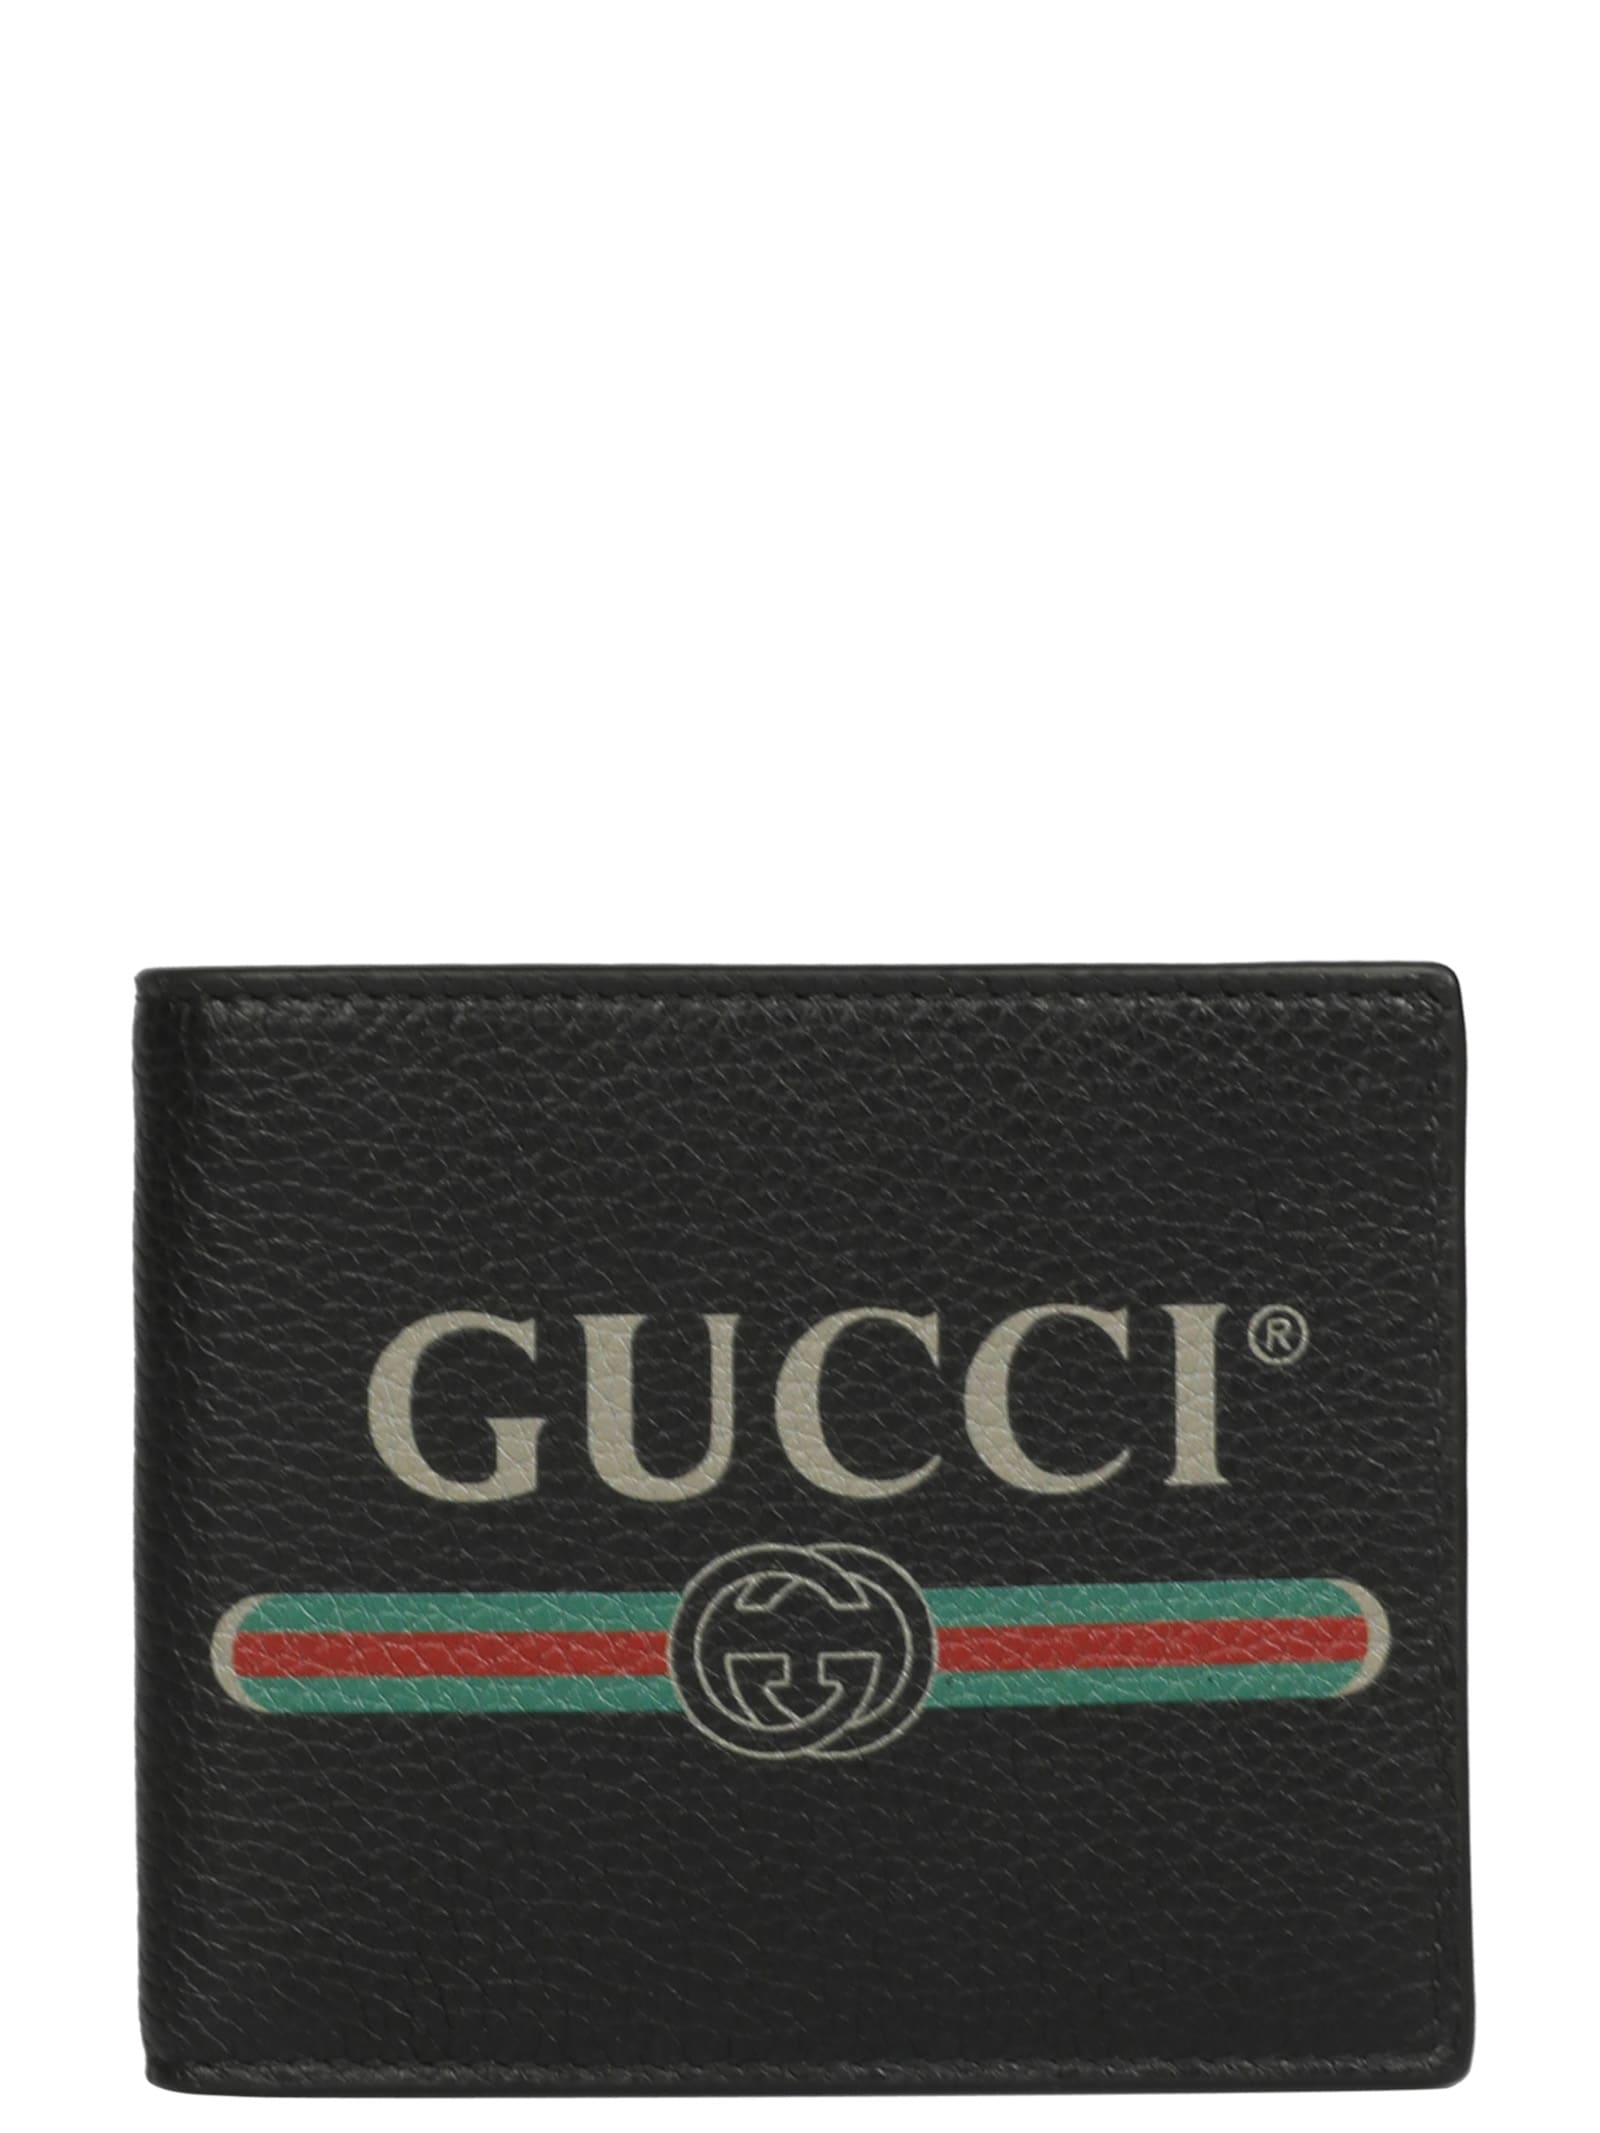 gucci wallet under 100